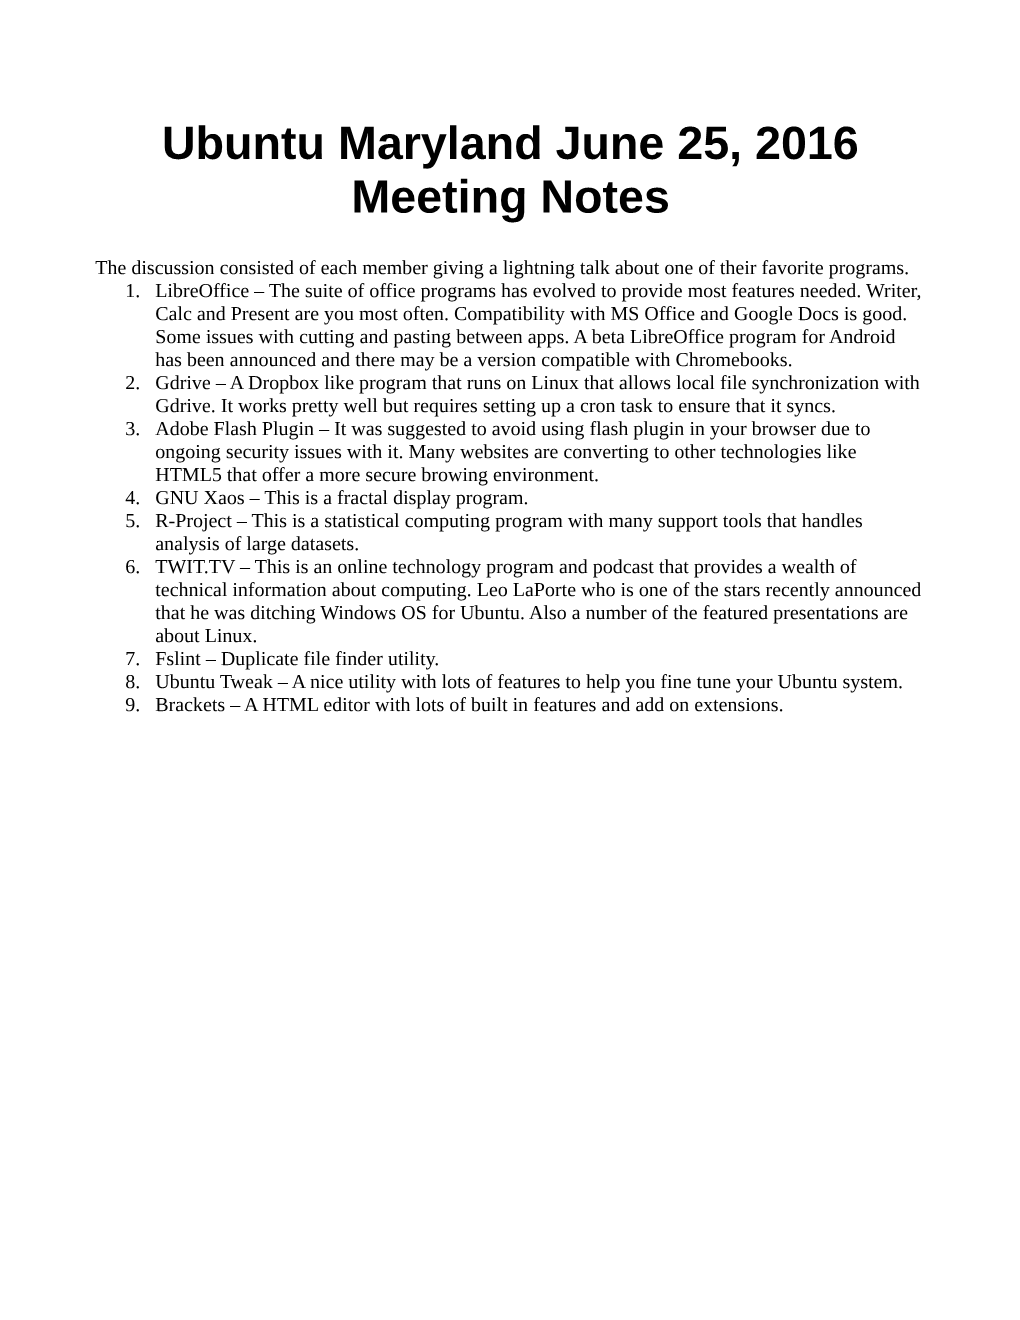 Ubuntu Maryland June 25, 2016 Meeting Notes